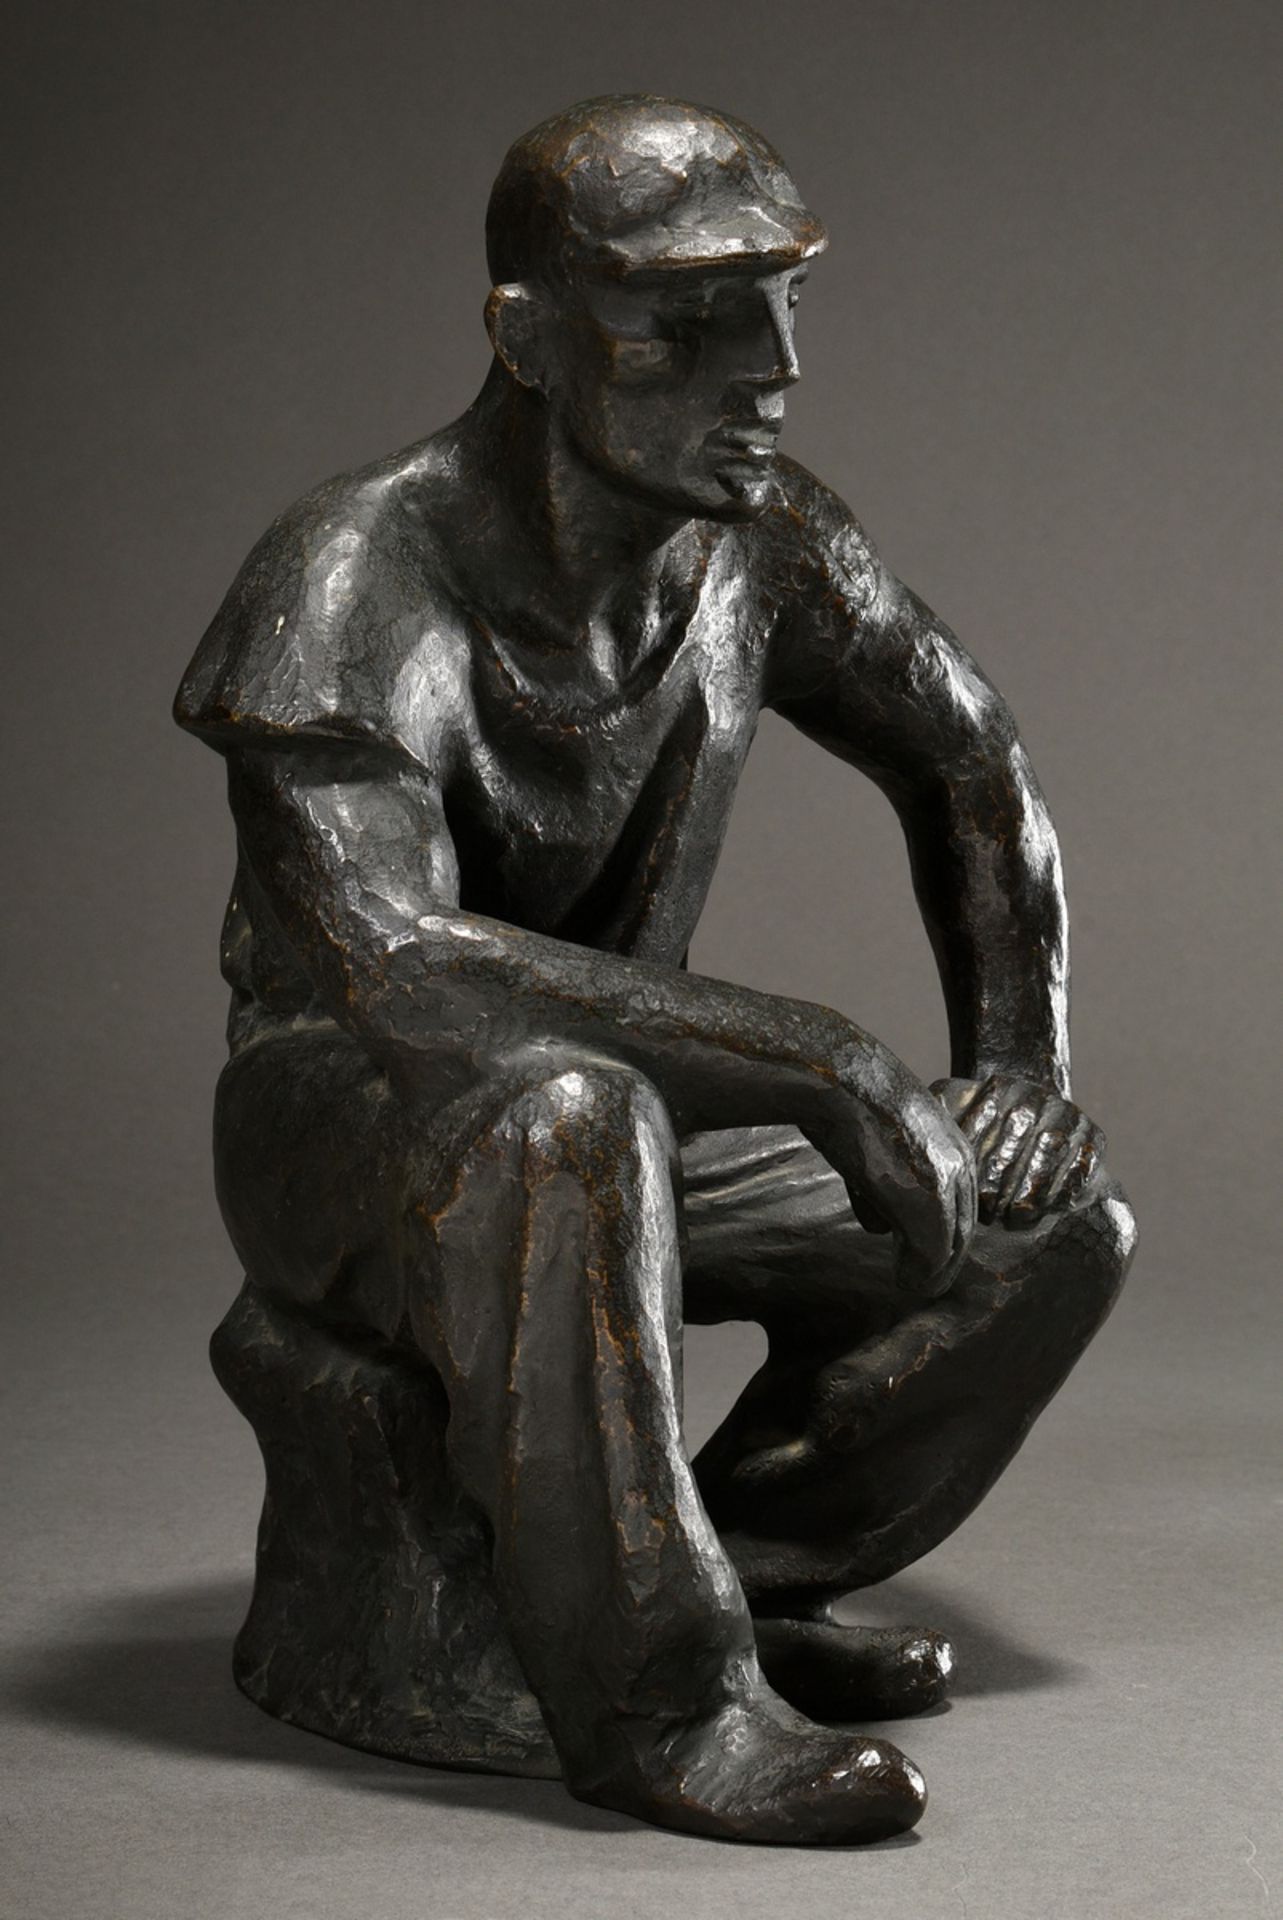 Propf, Robert (1910-1986) „Sitzender Bergmann“, Bronze, dunkel patiniert, verso sign., H. 29cm, min